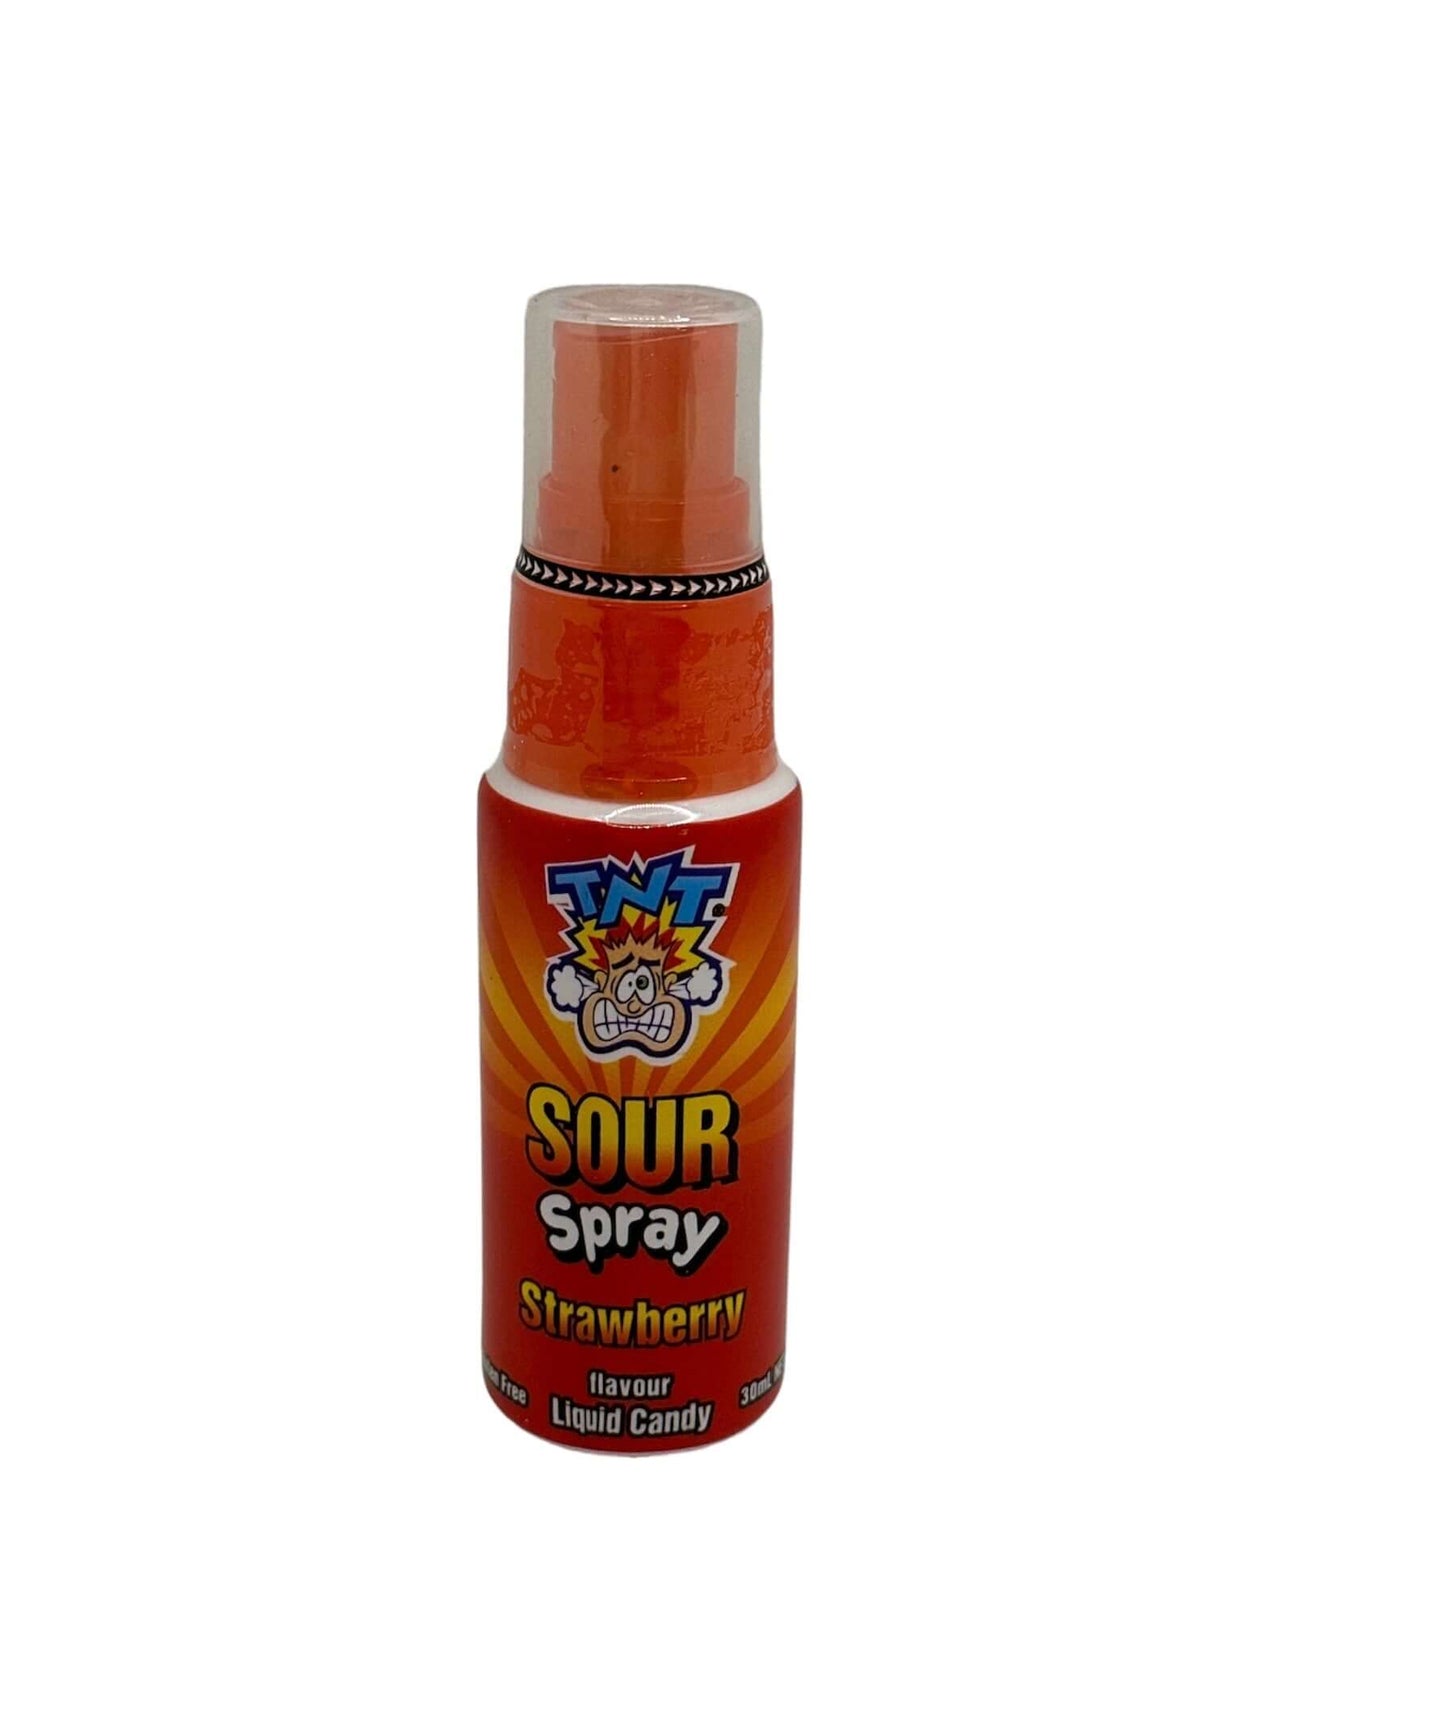 TNT Sour Spray